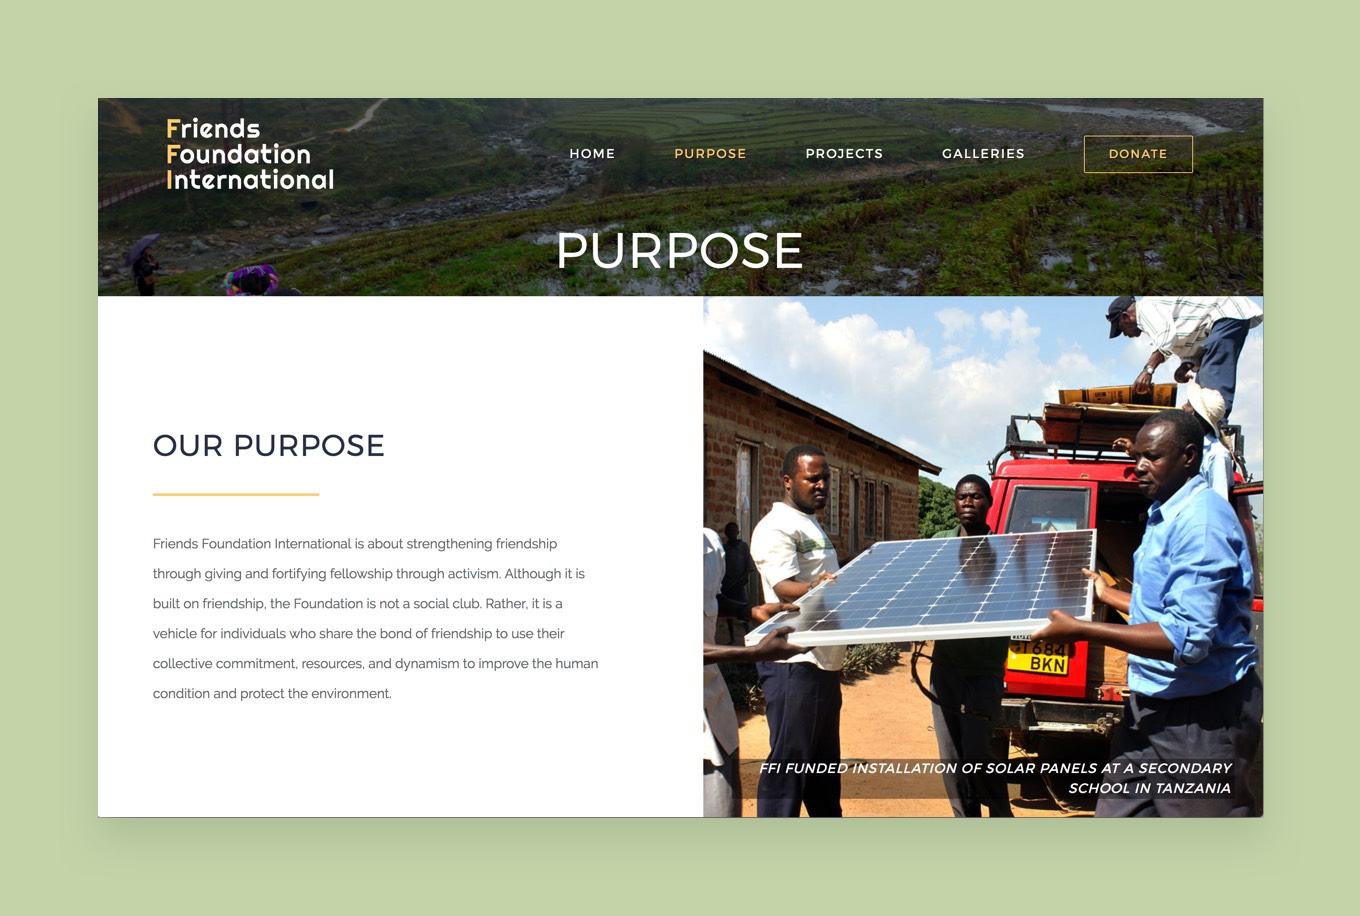 Screenshot of the Friends Fondation International Purpose page